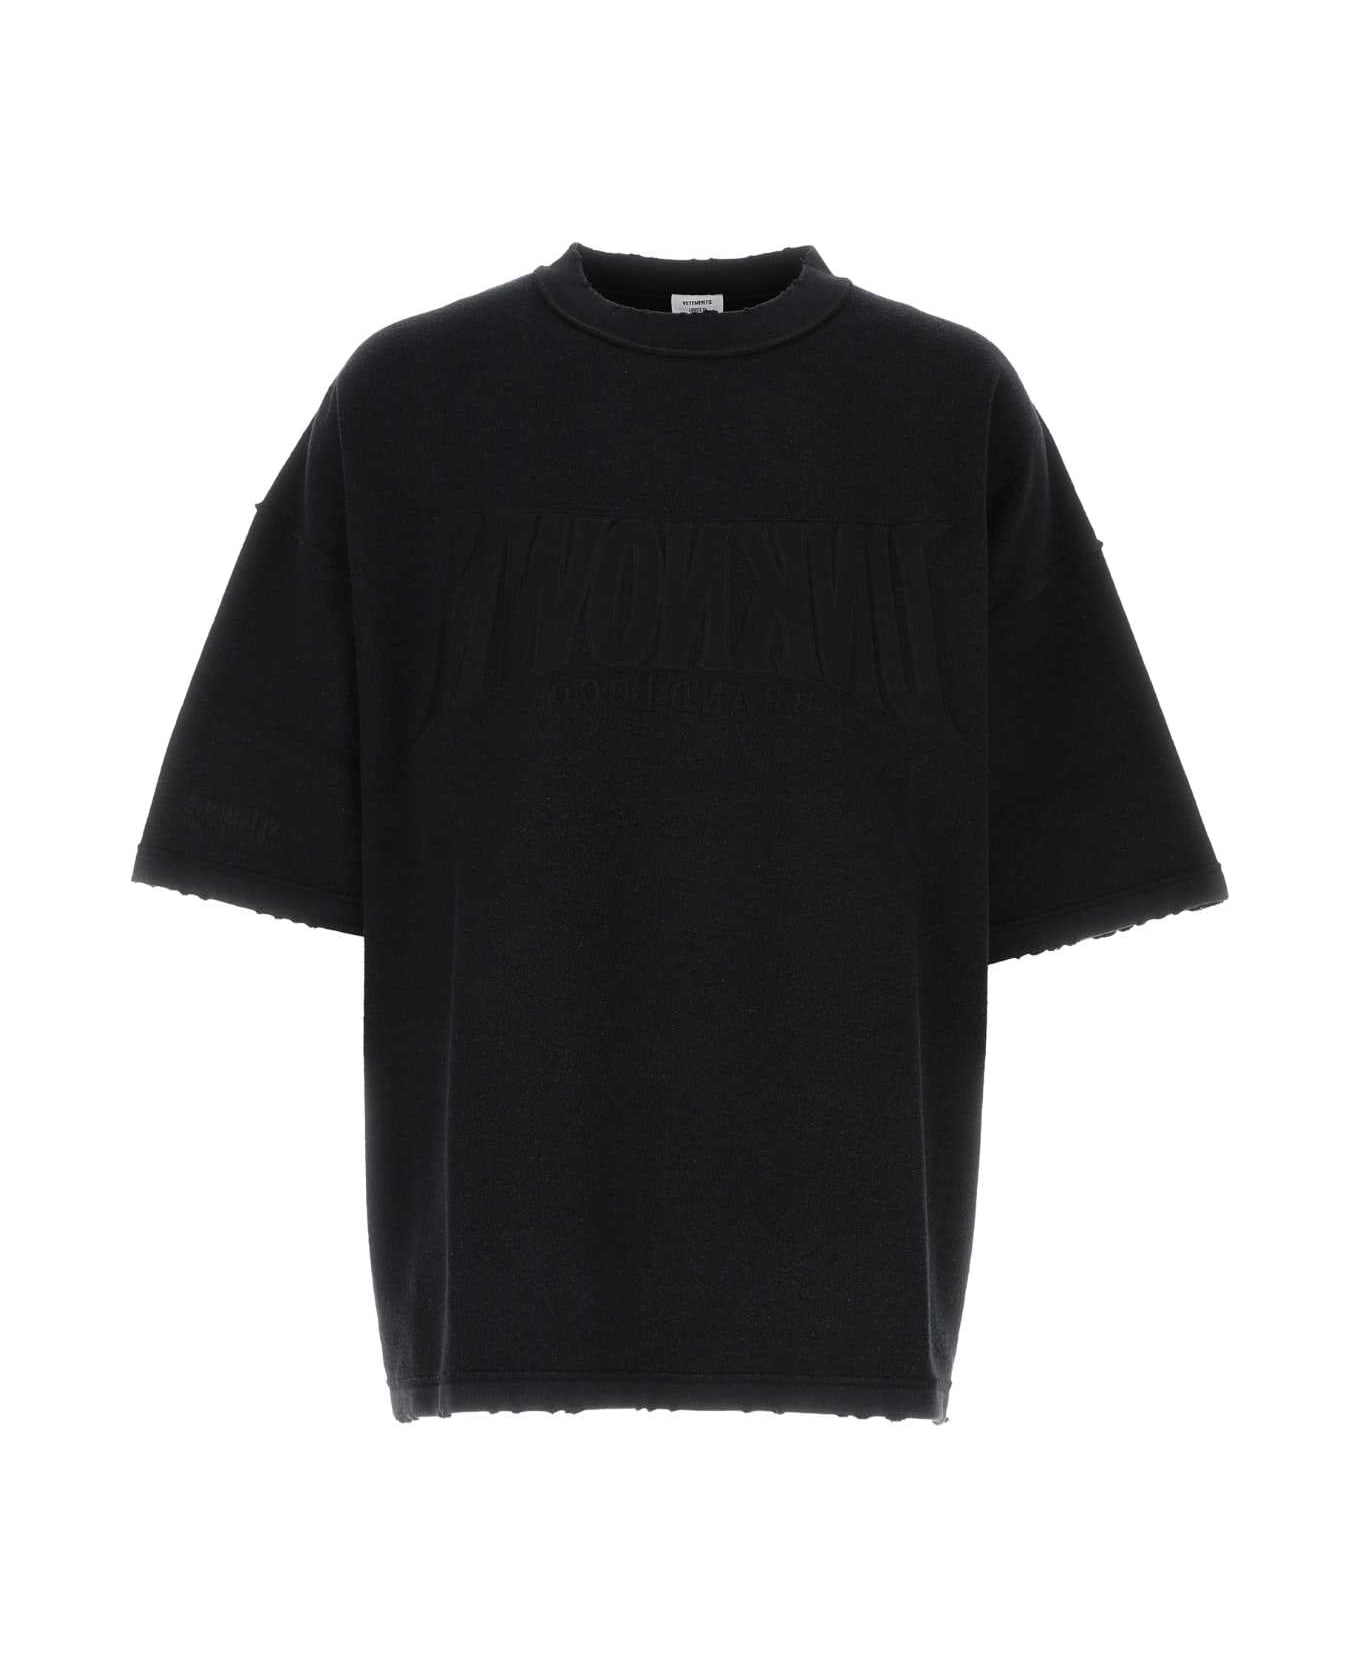 VETEMENTS Black Cotton Blend Oversize T-shirt - DIRTYBLACK